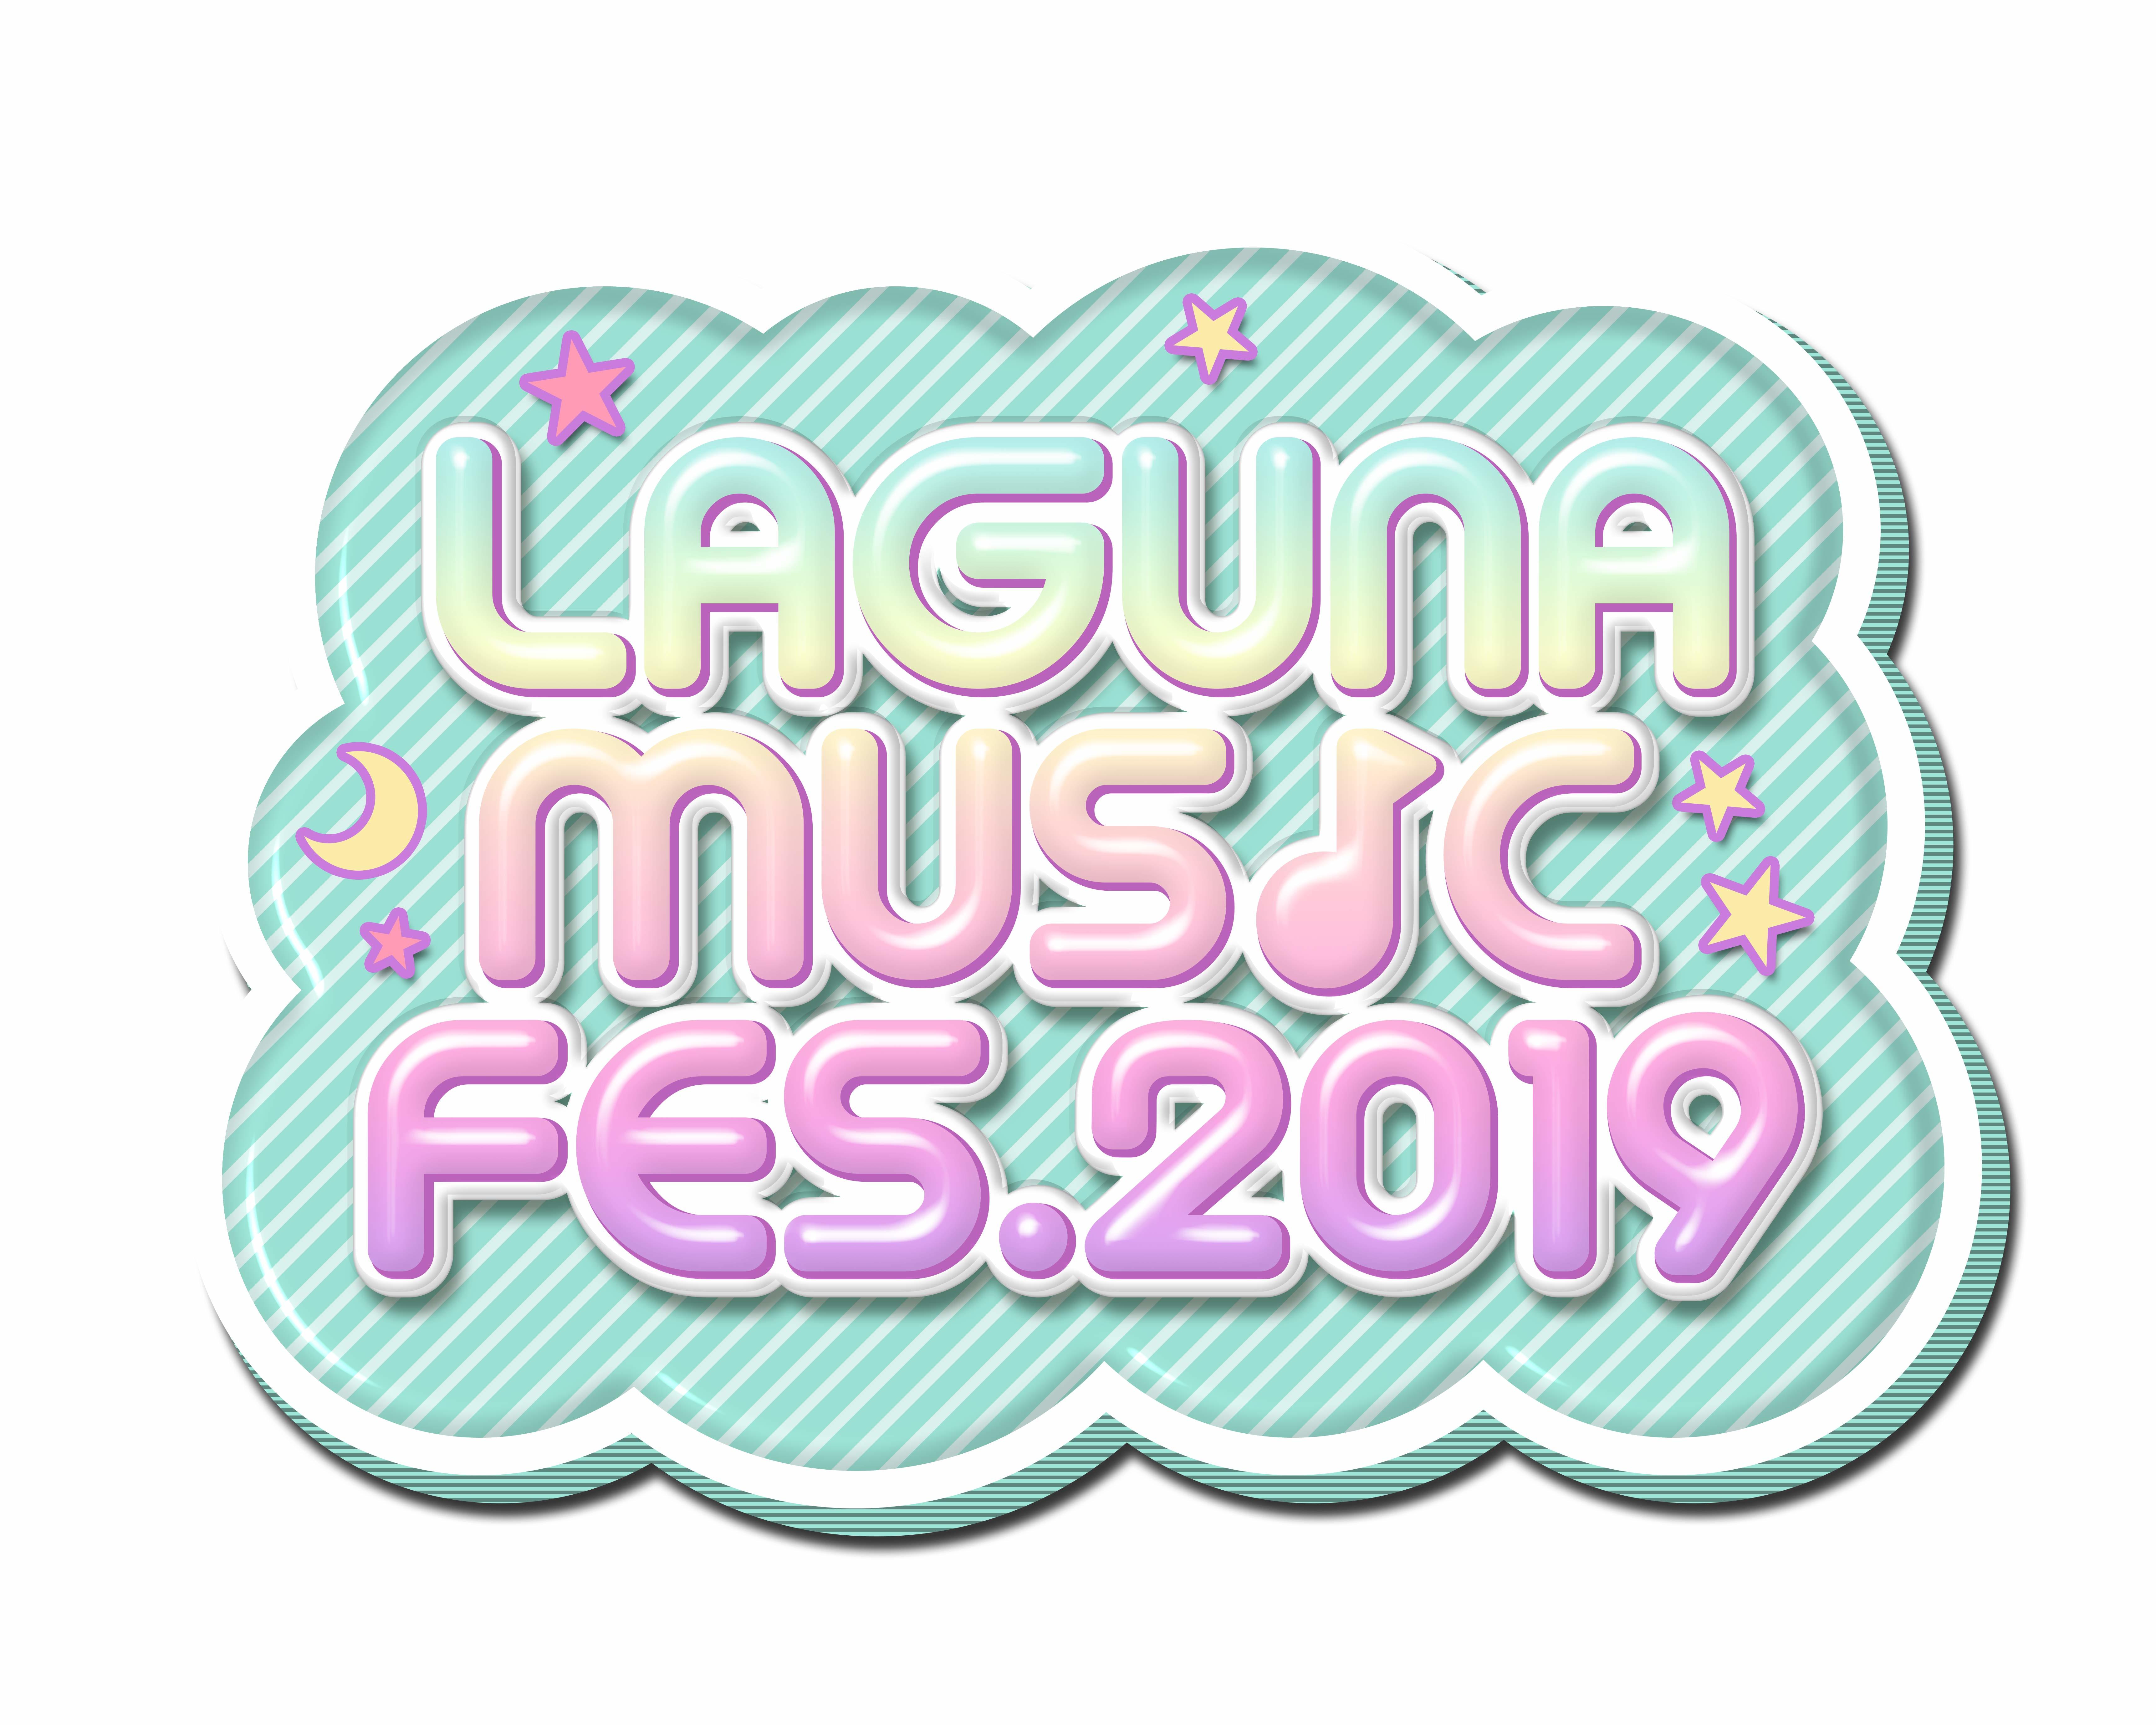 LAGUNA MUSIC FES.2019